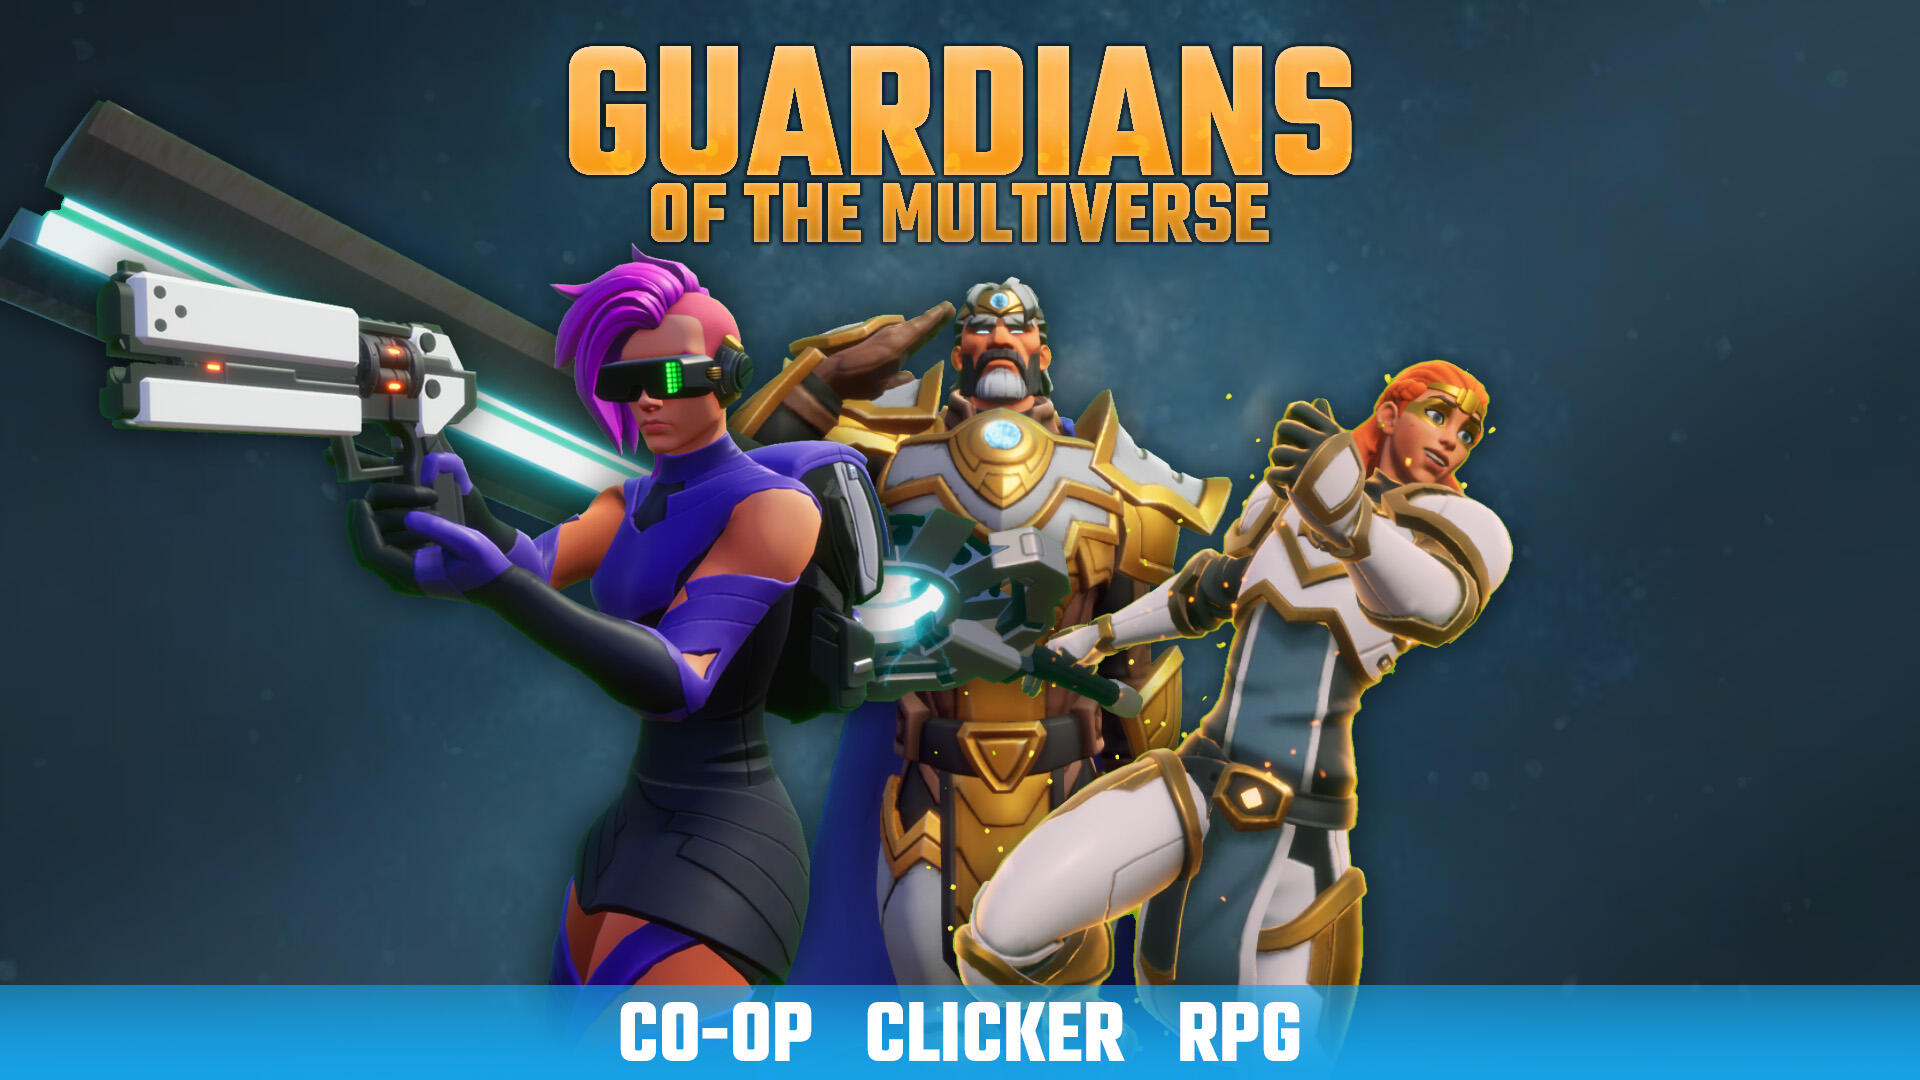 Guardians of the Multiverse. Multiverse-Core. Multiverse game. Sonic Multiverse. Back to the multiverse